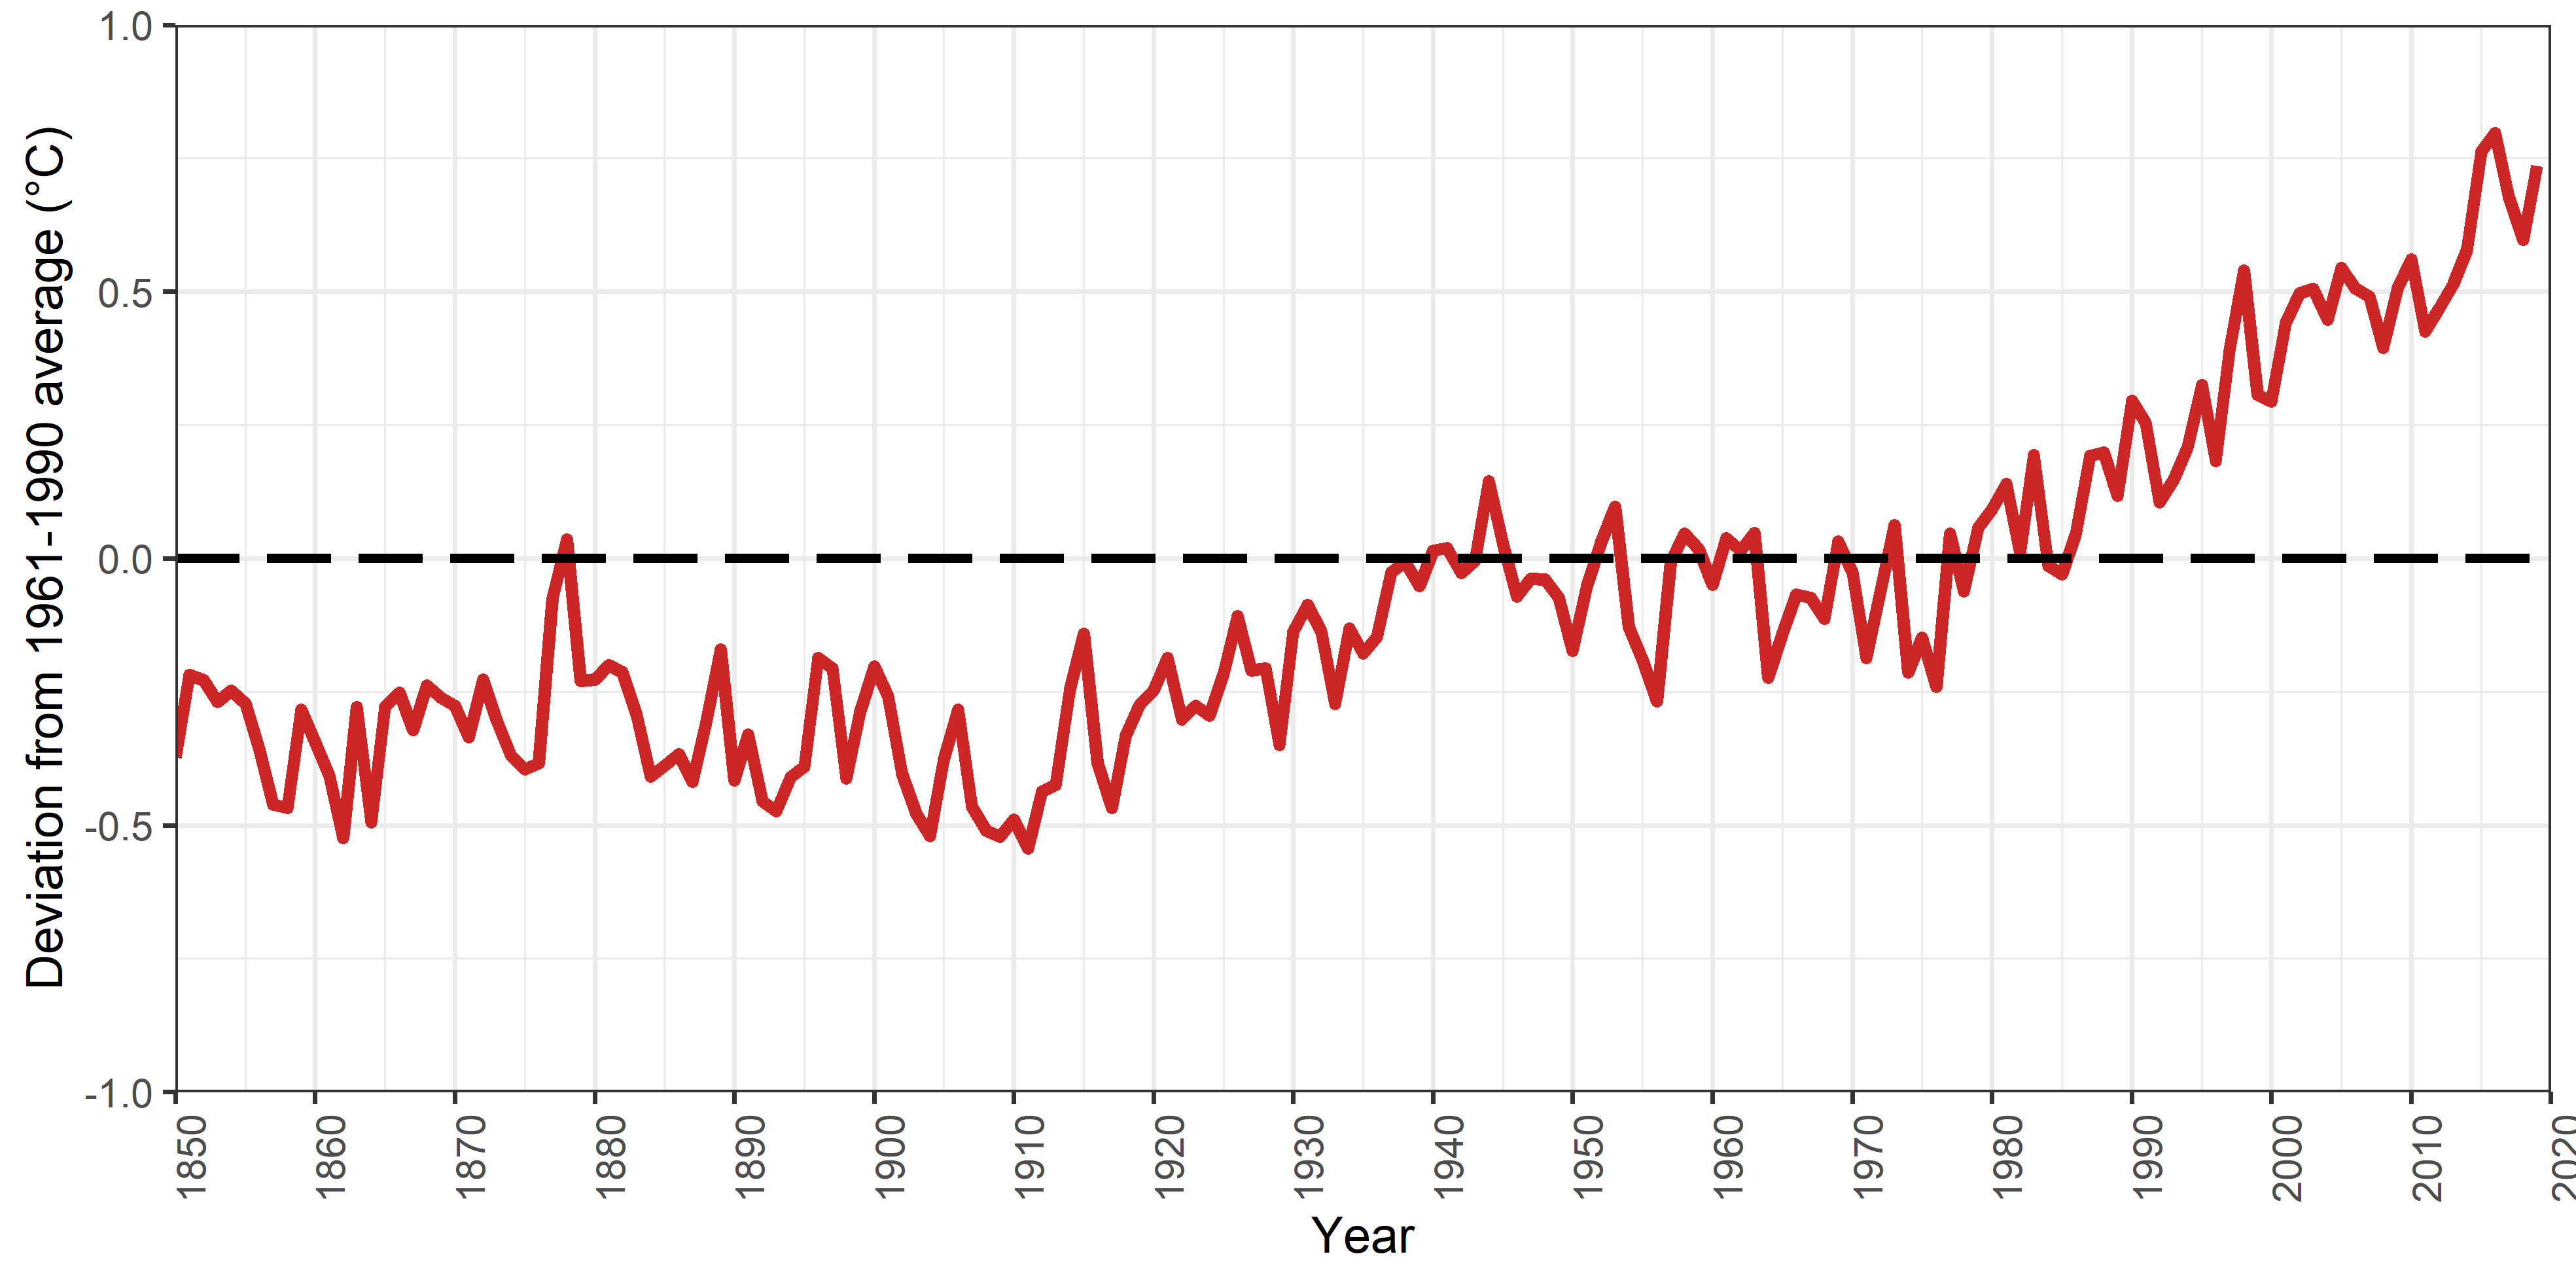 Global warming<br>Data source: HadCRUT4 (https://www.metoffice.gov.uk/hadobs/hadcrut4/index.html)